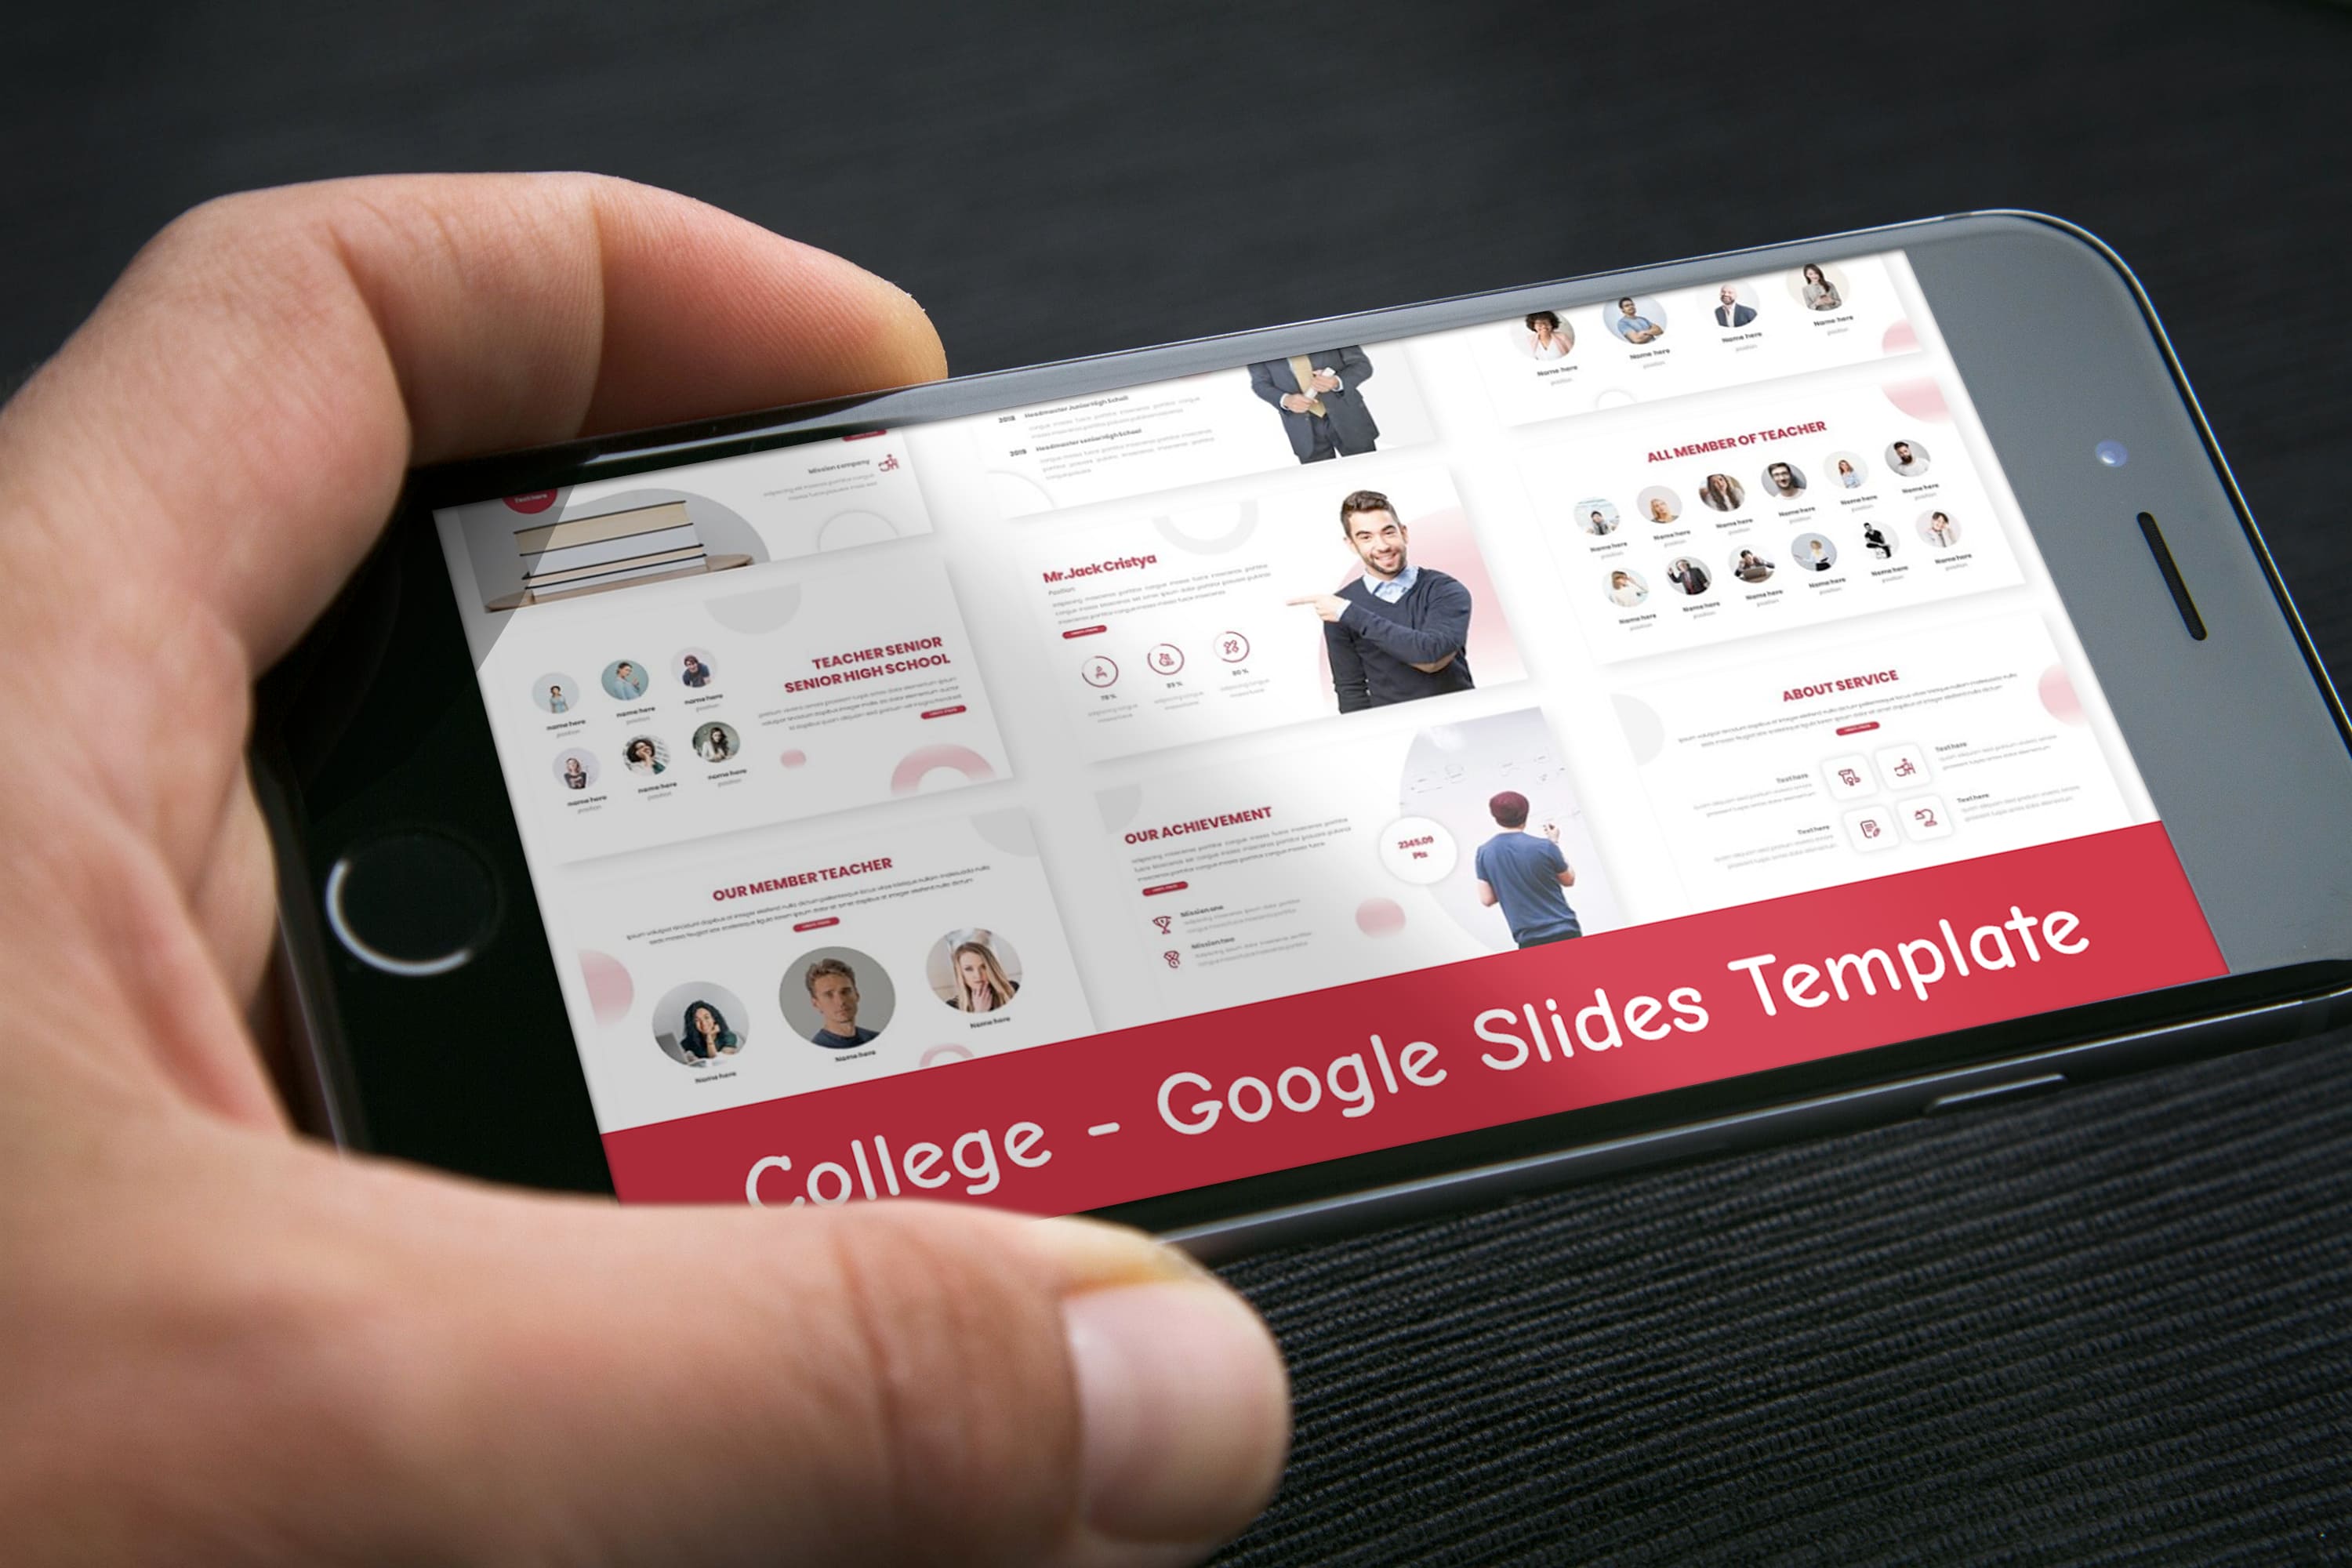 College - Google Slides Template - Mockup on Smartphone.